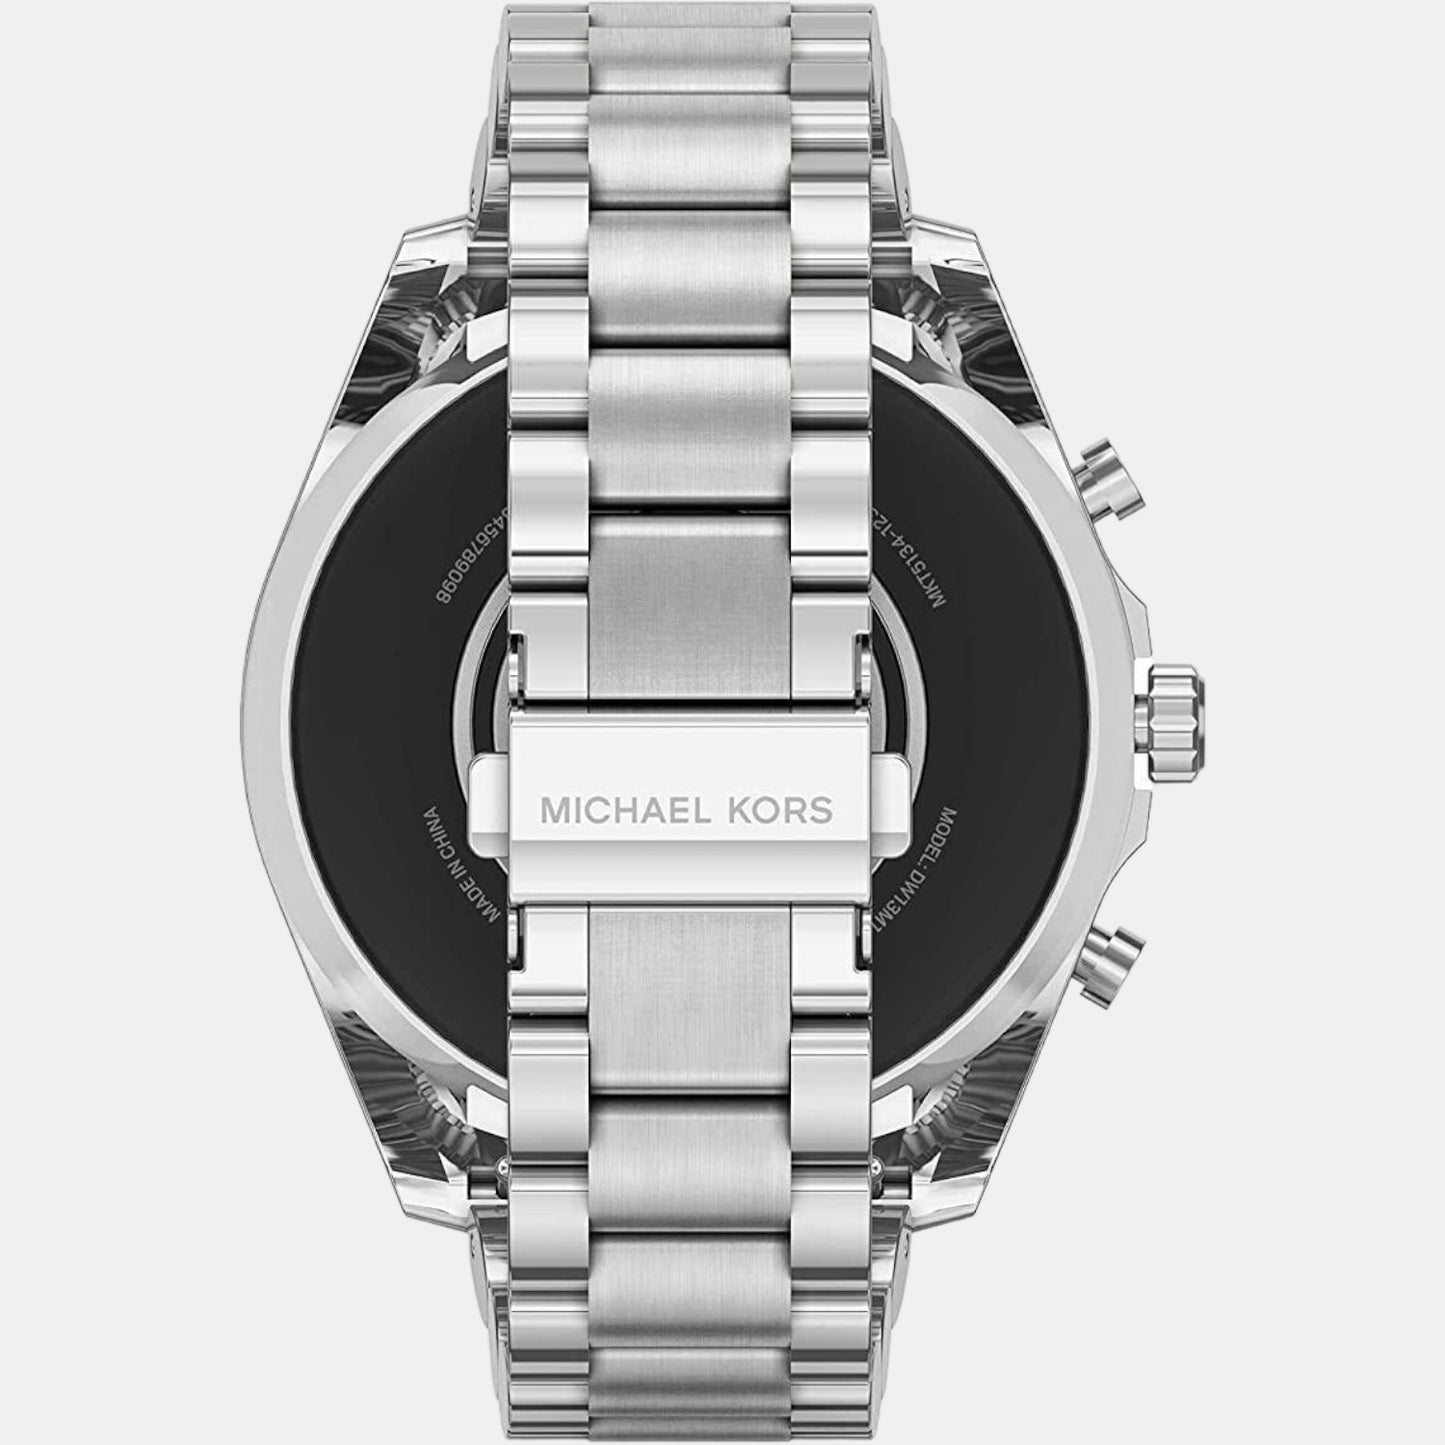 michael-kors-stainless-steel-full-color-display-digital-women-smart-watch-mkt5139